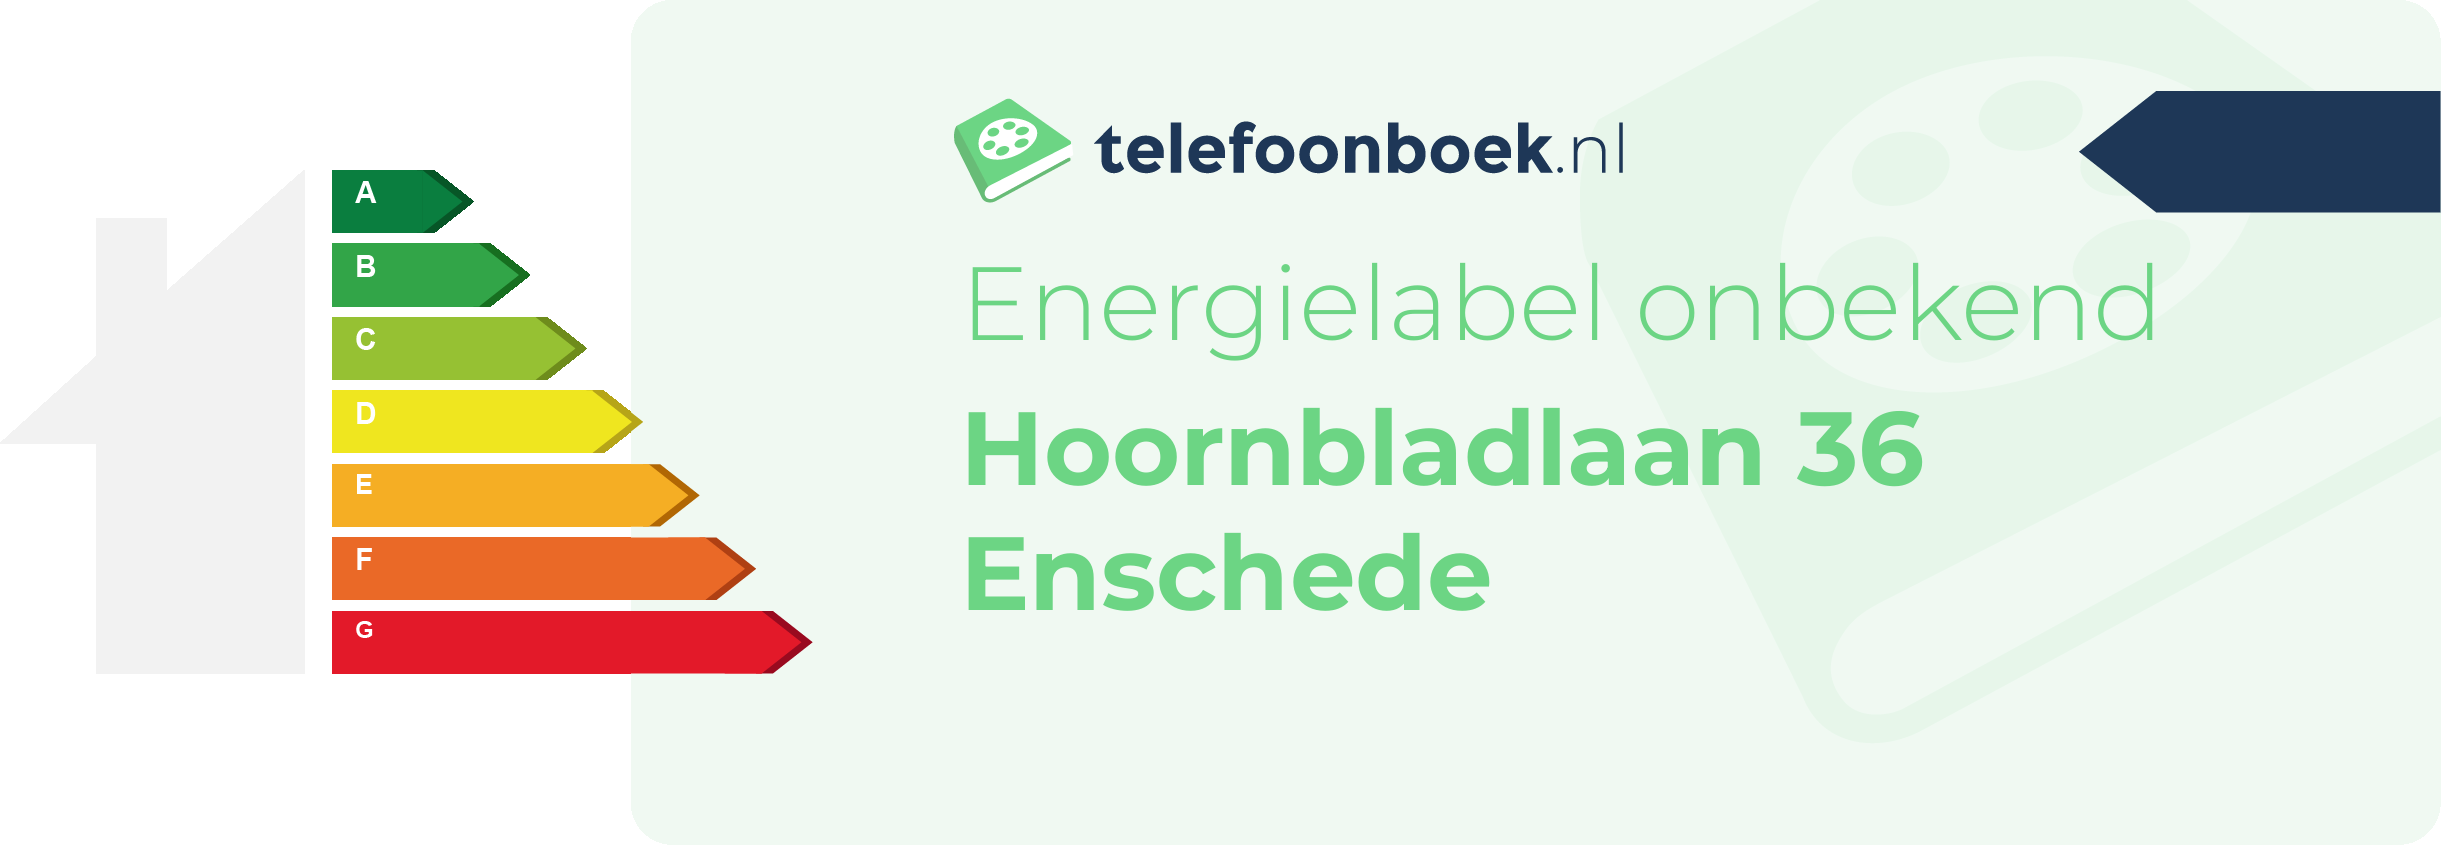 Energielabel Hoornbladlaan 36 Enschede